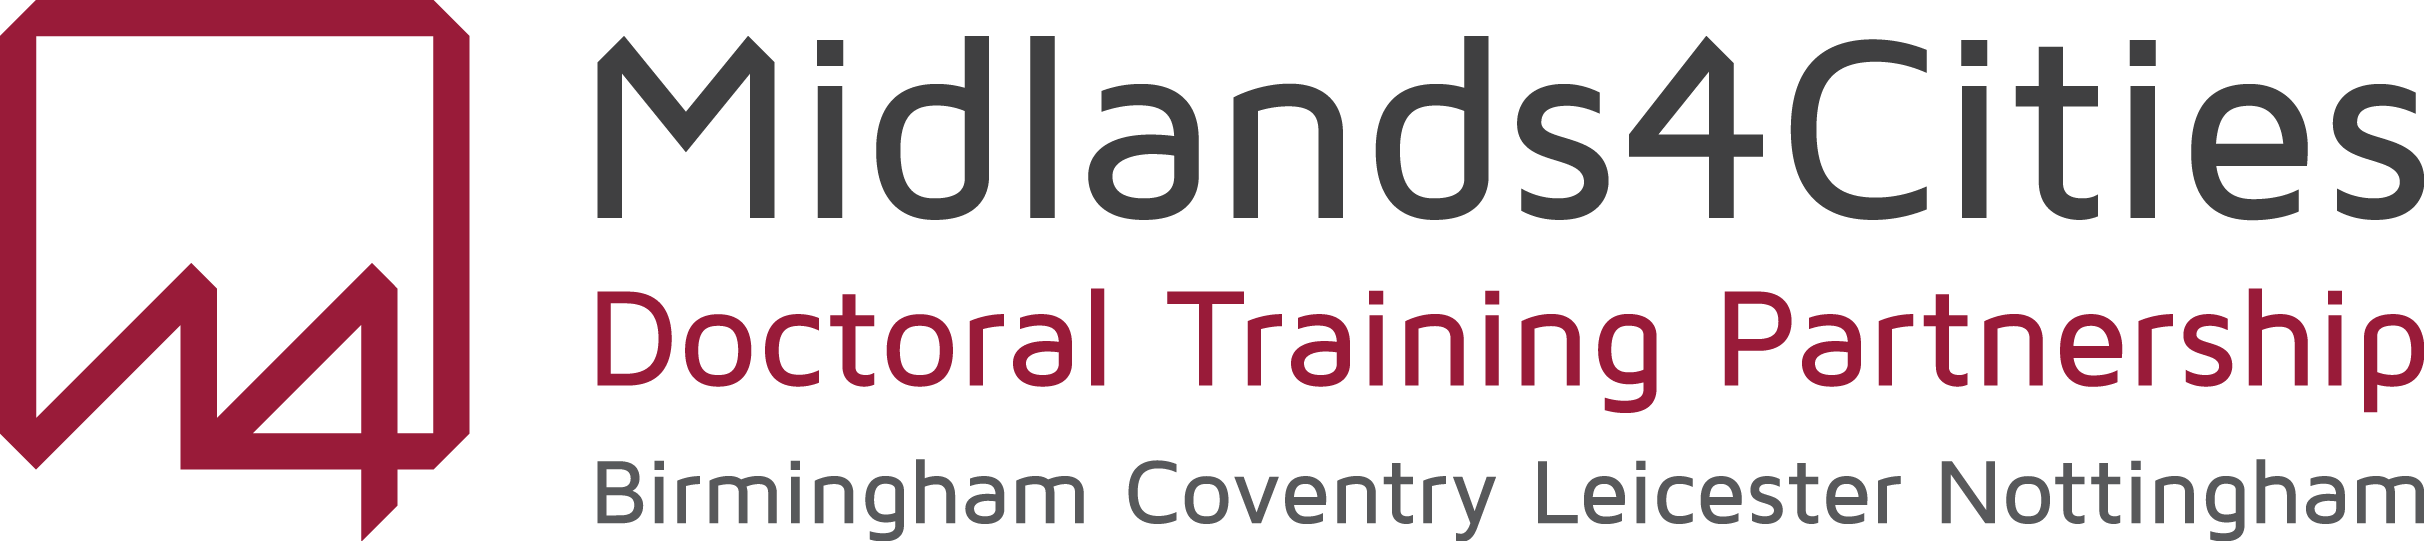 Midlands4Cities logo